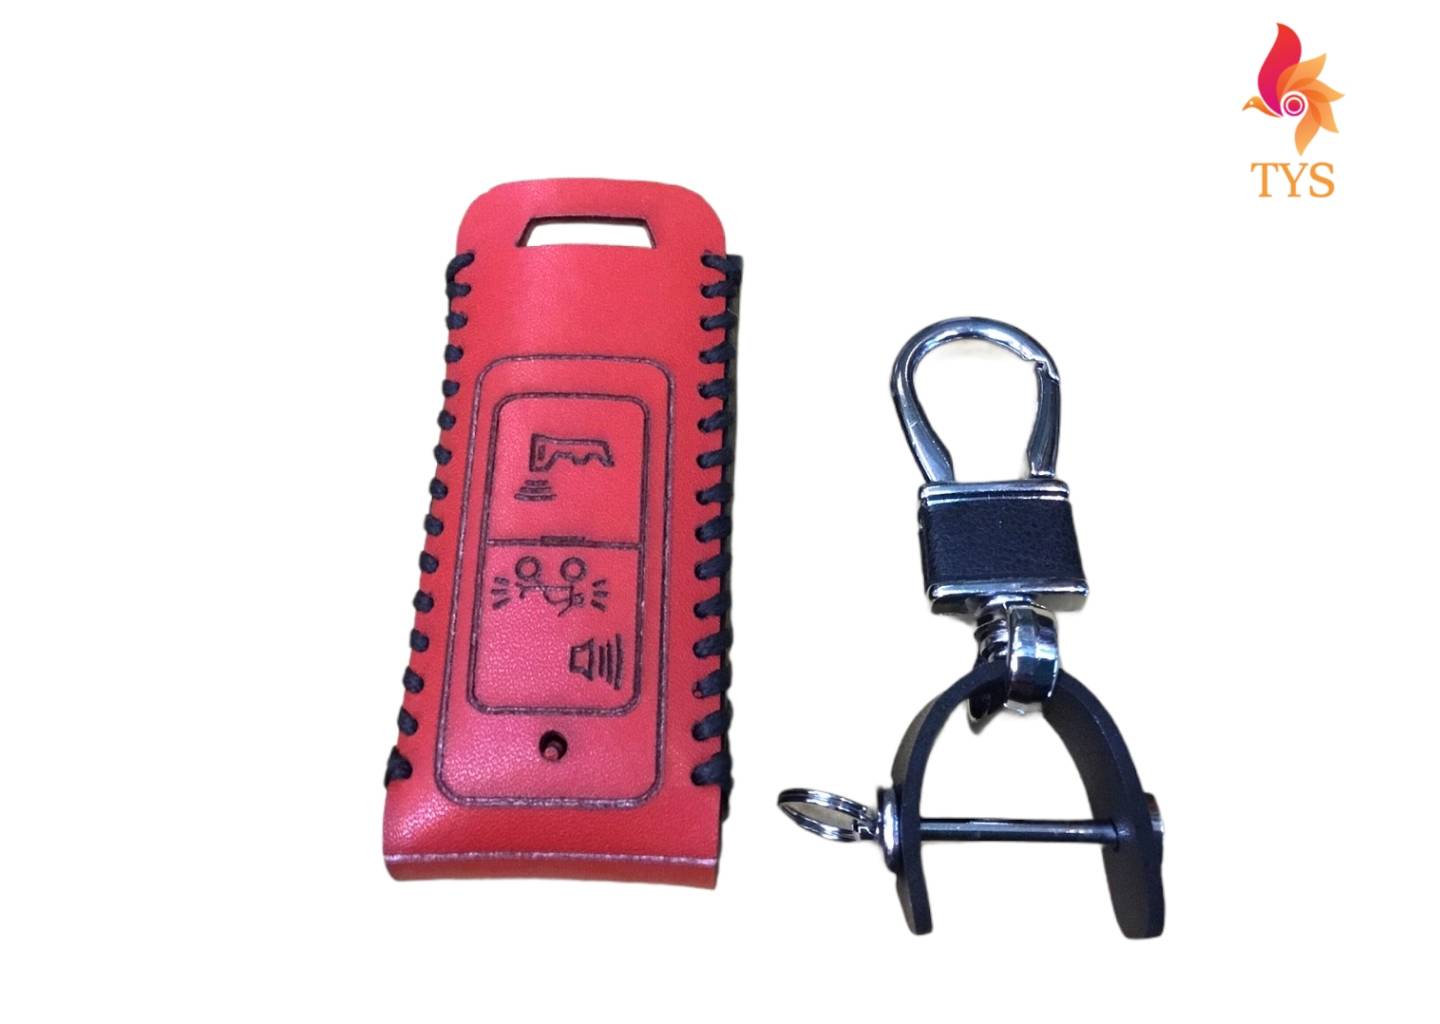 PCX ซองกุญแจ ซองรีโมท Pcx160 pcx2021 ซองหนังแท้แฮนเมด ของไทย100% สีแดง